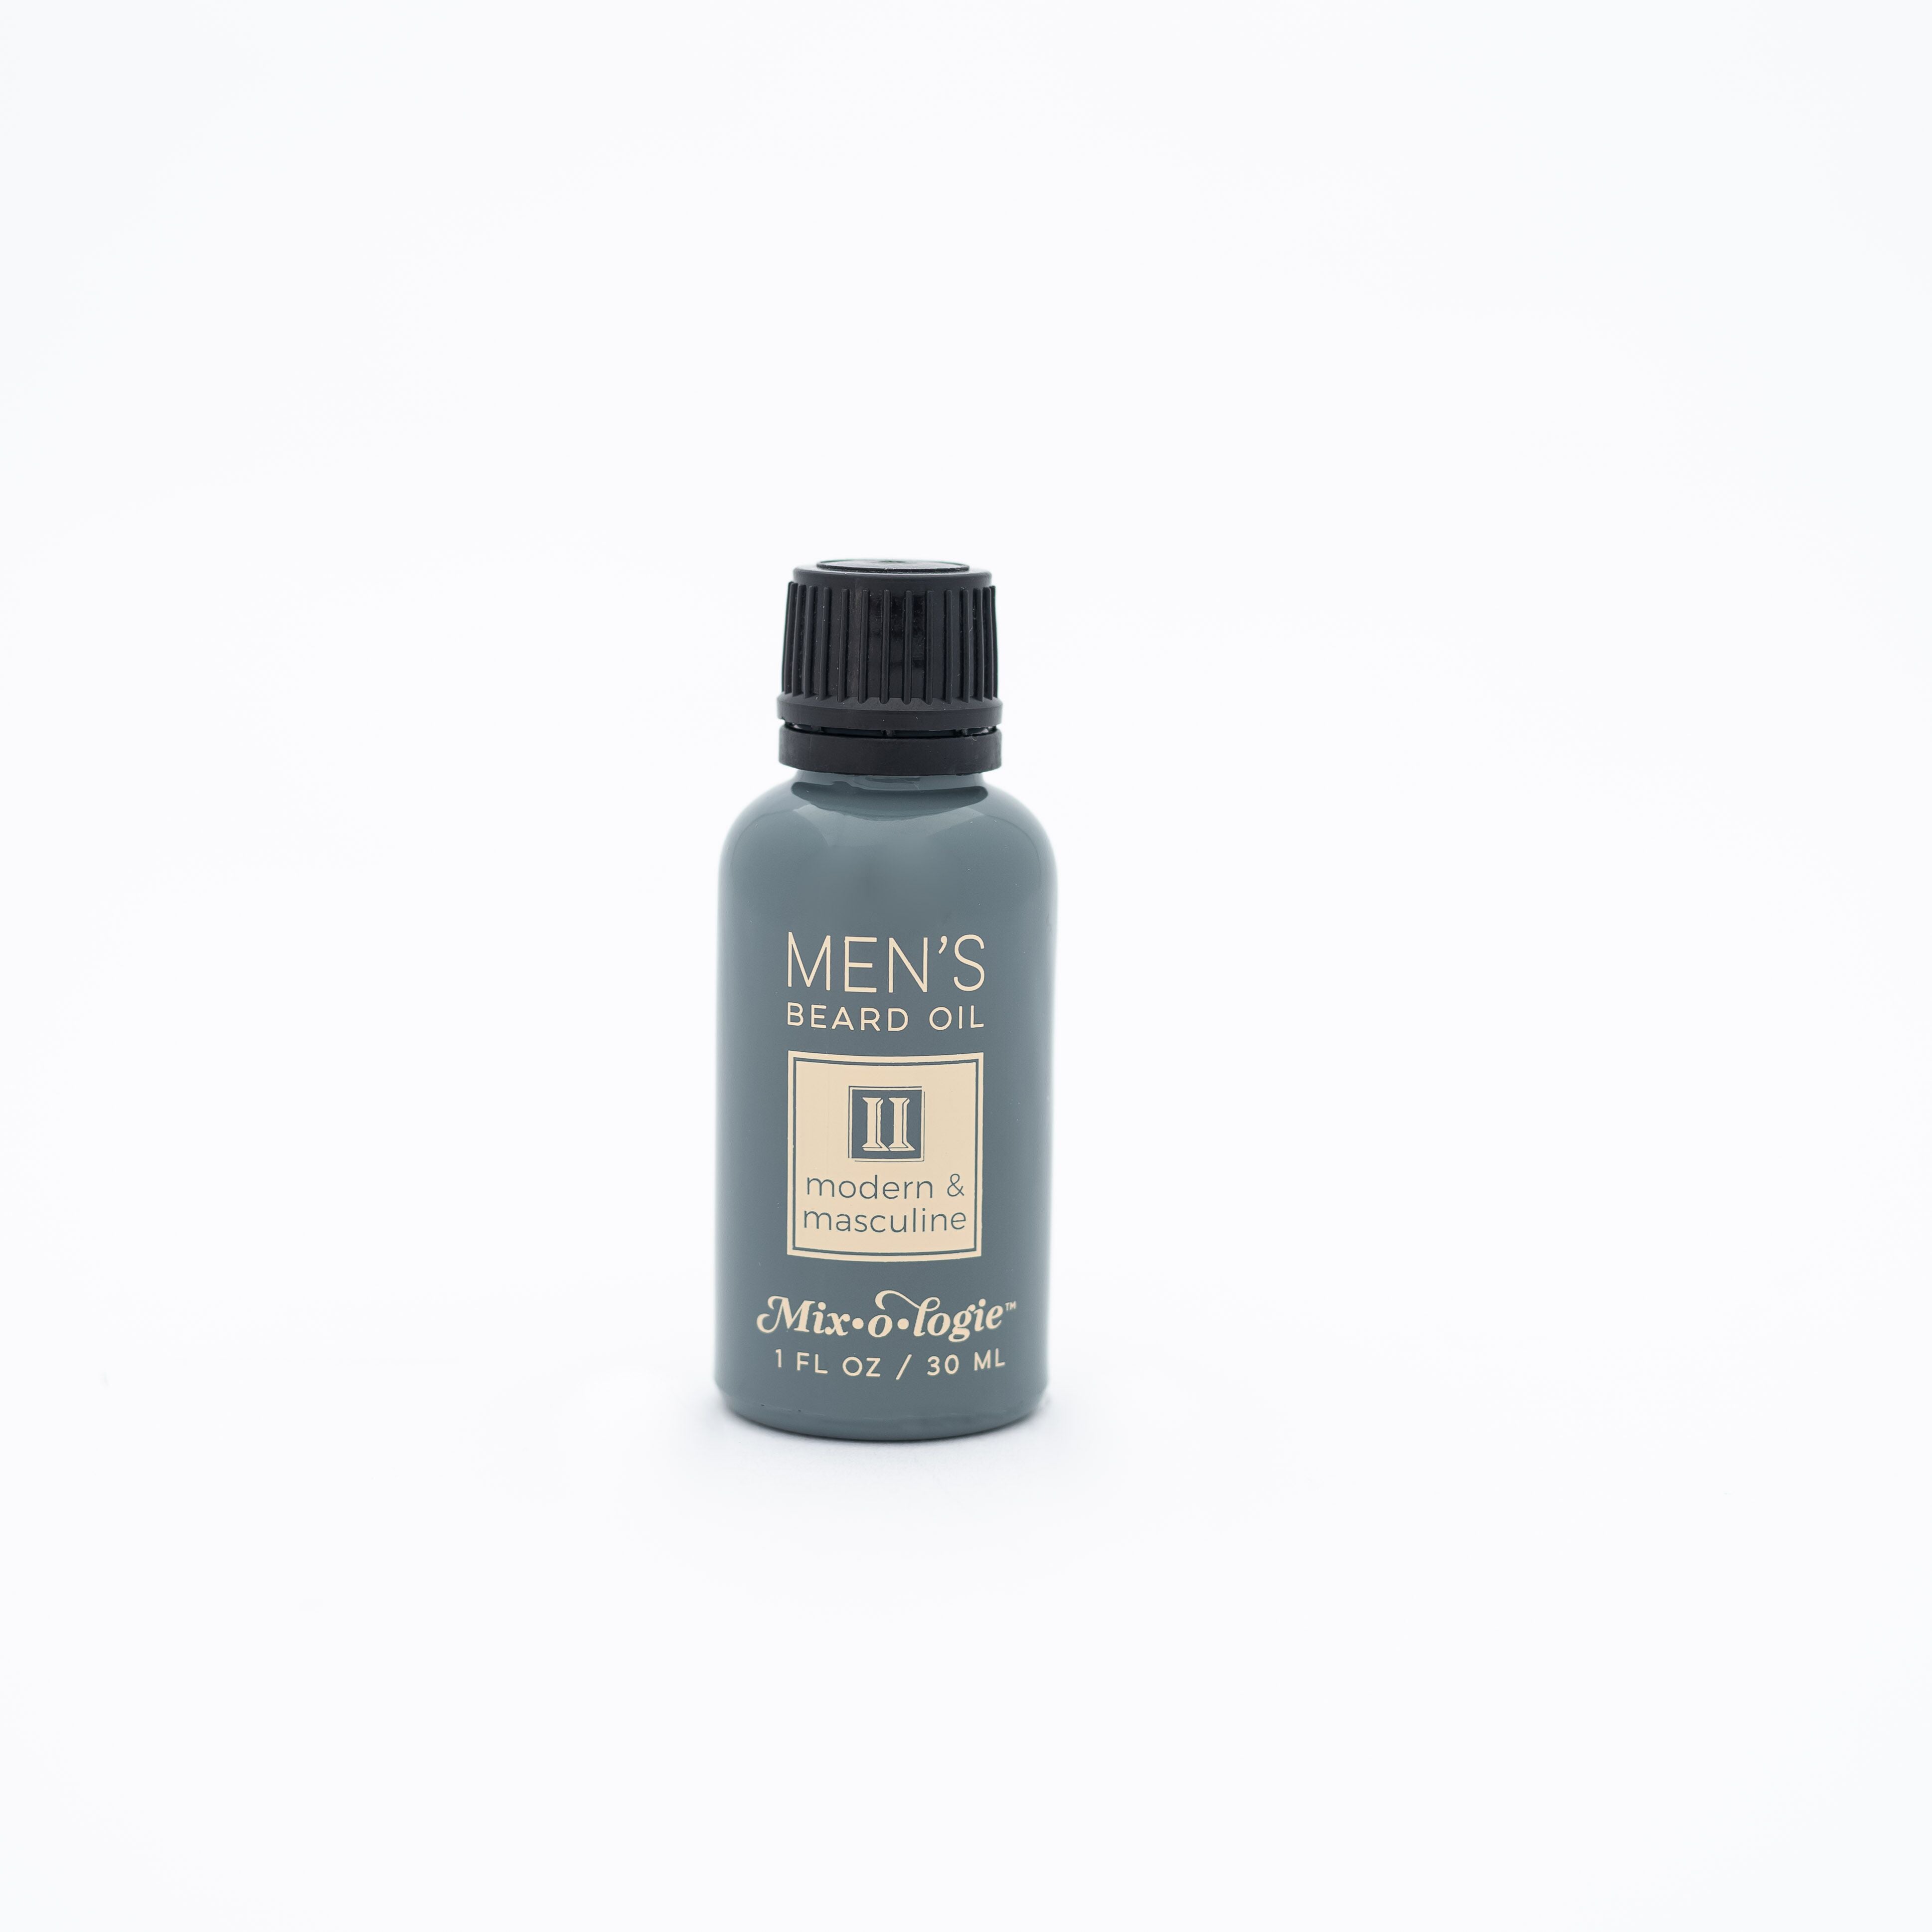 MEN-II Beard Oil (Modern & Masculine) - Tester